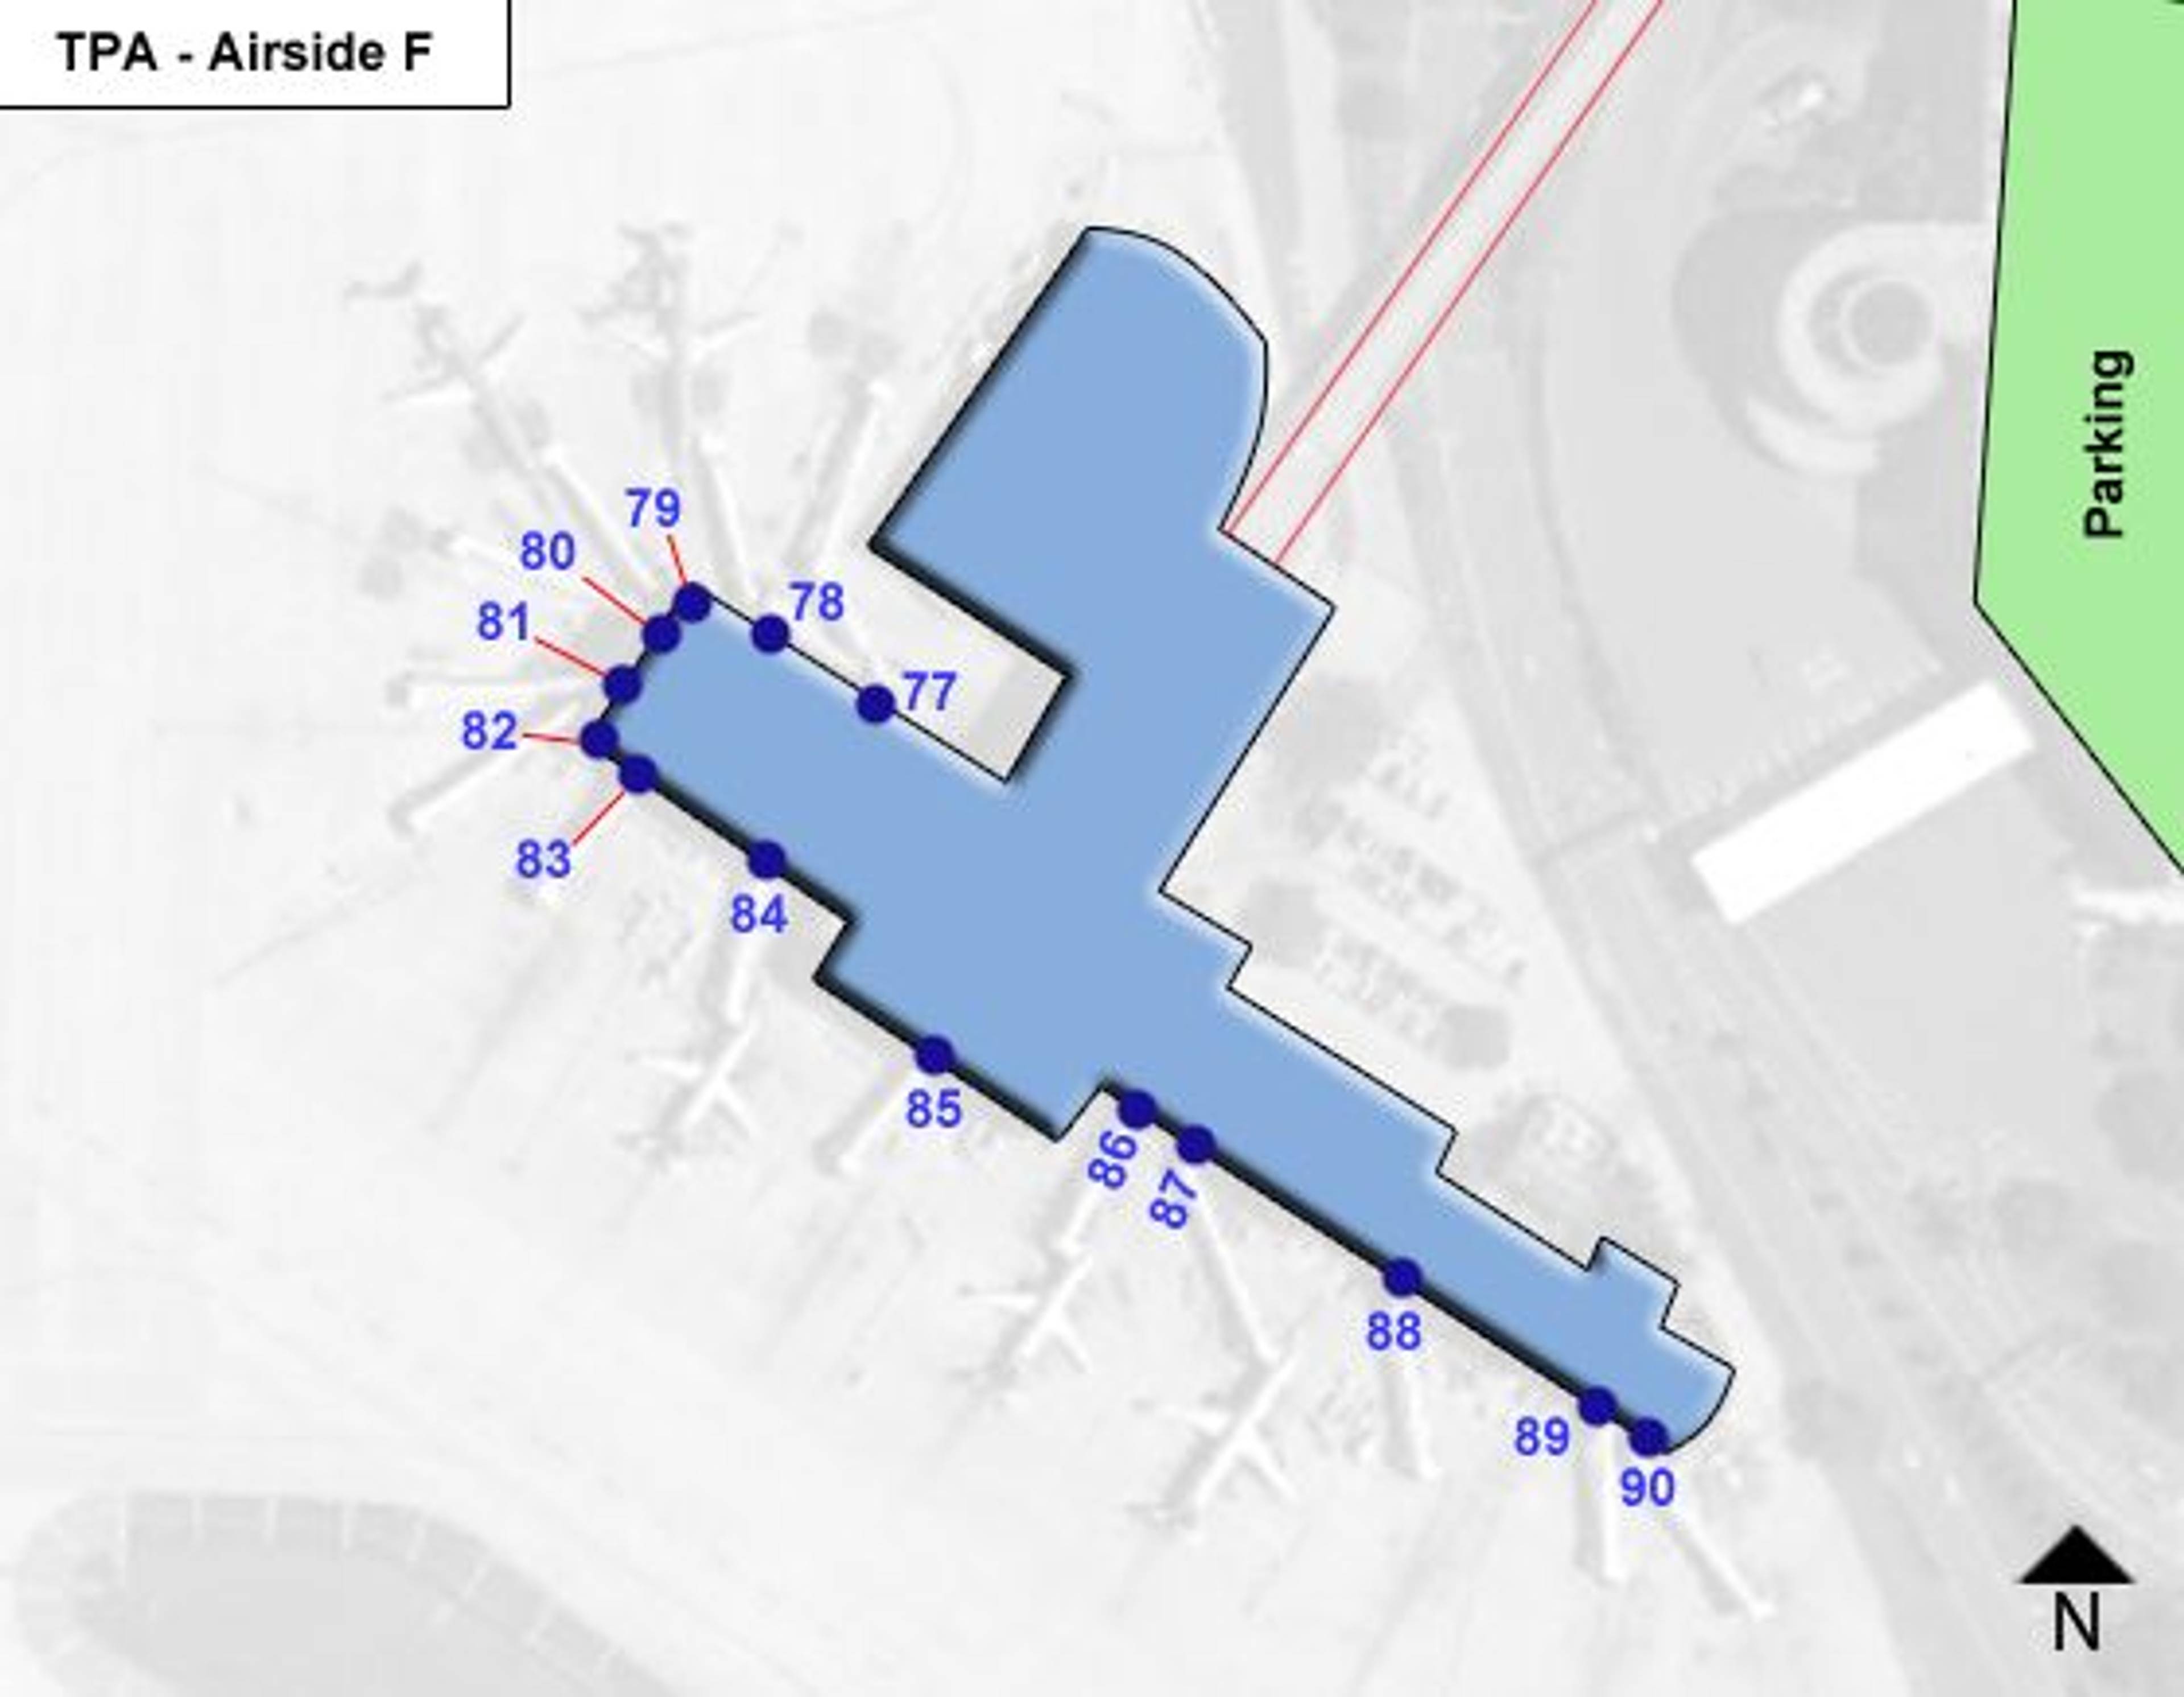 Tampa Airport Airside F Map